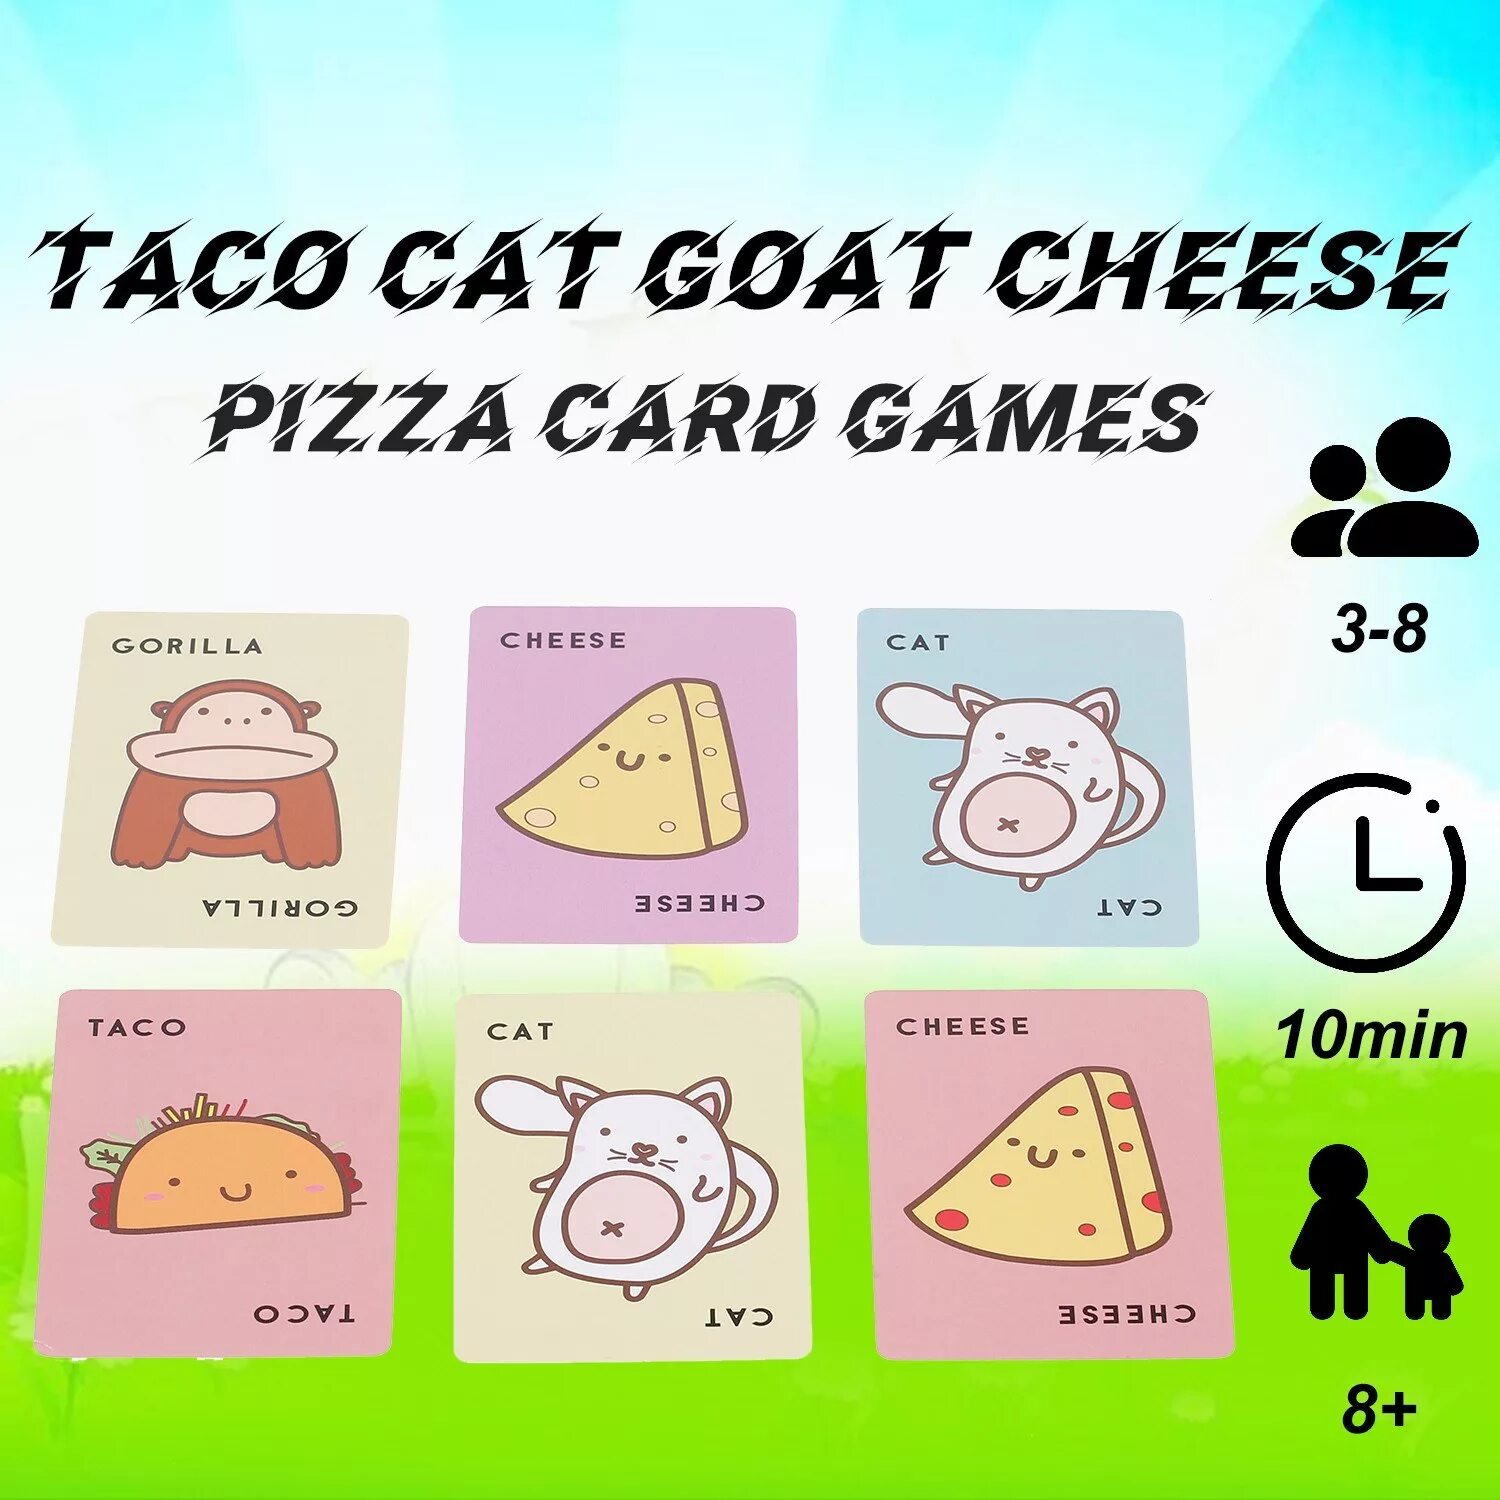 Тако кот. Тако кот коза сыр пицца. Игра кот коза сыр пицца. Cheese Card game. Pizza Card.